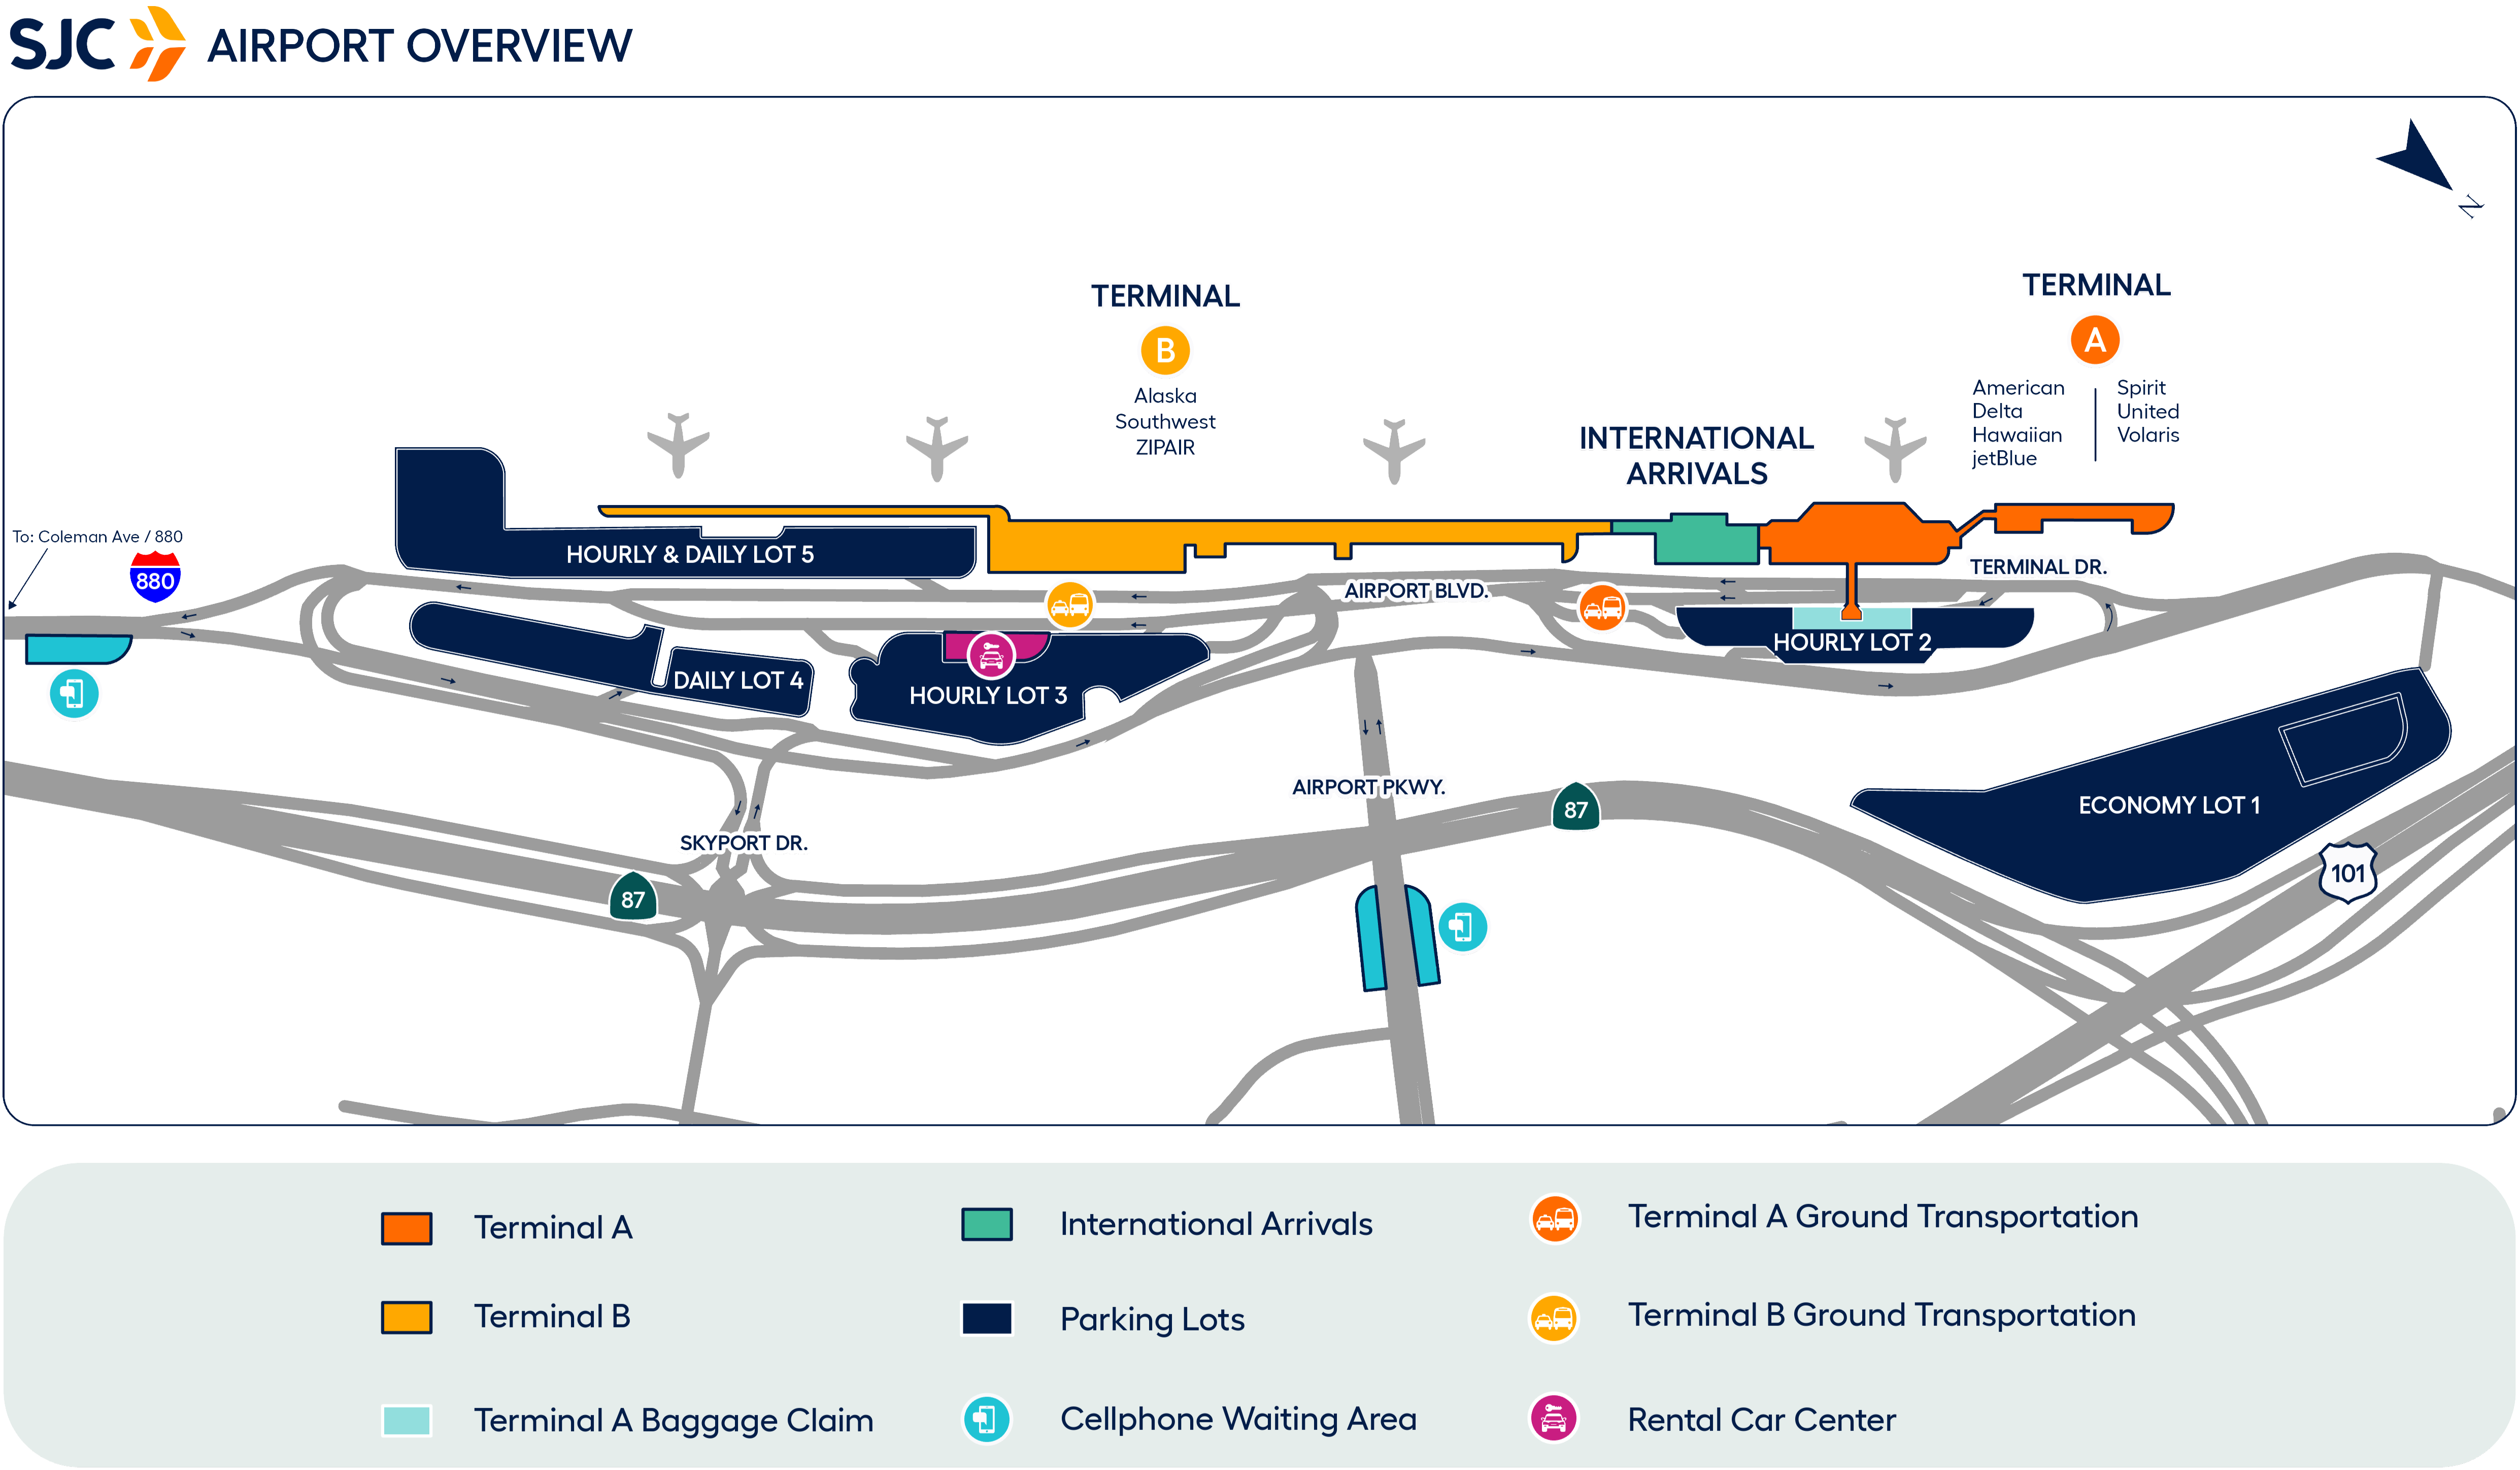 SJC Airport Map Overview